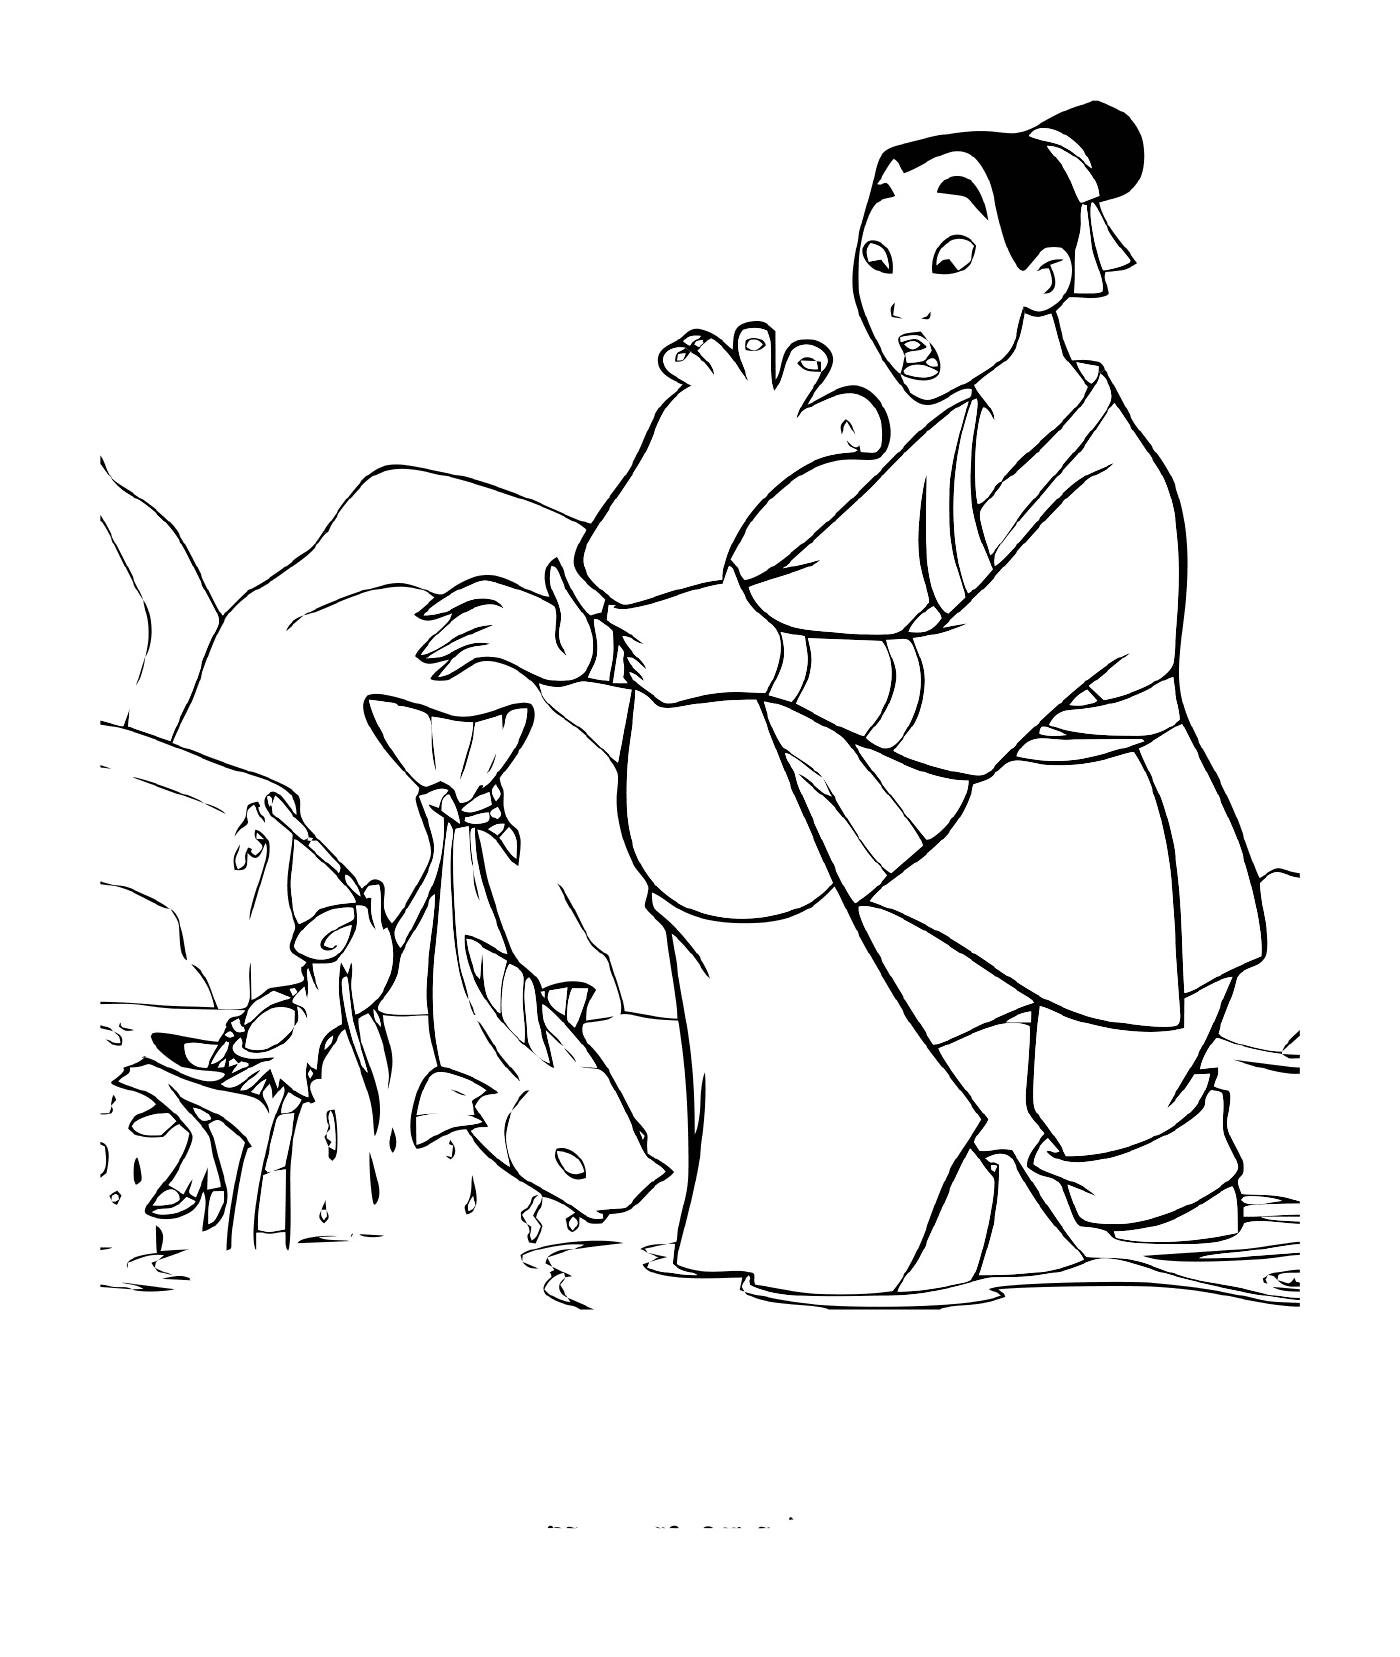  Mulan fishing with Mushu 